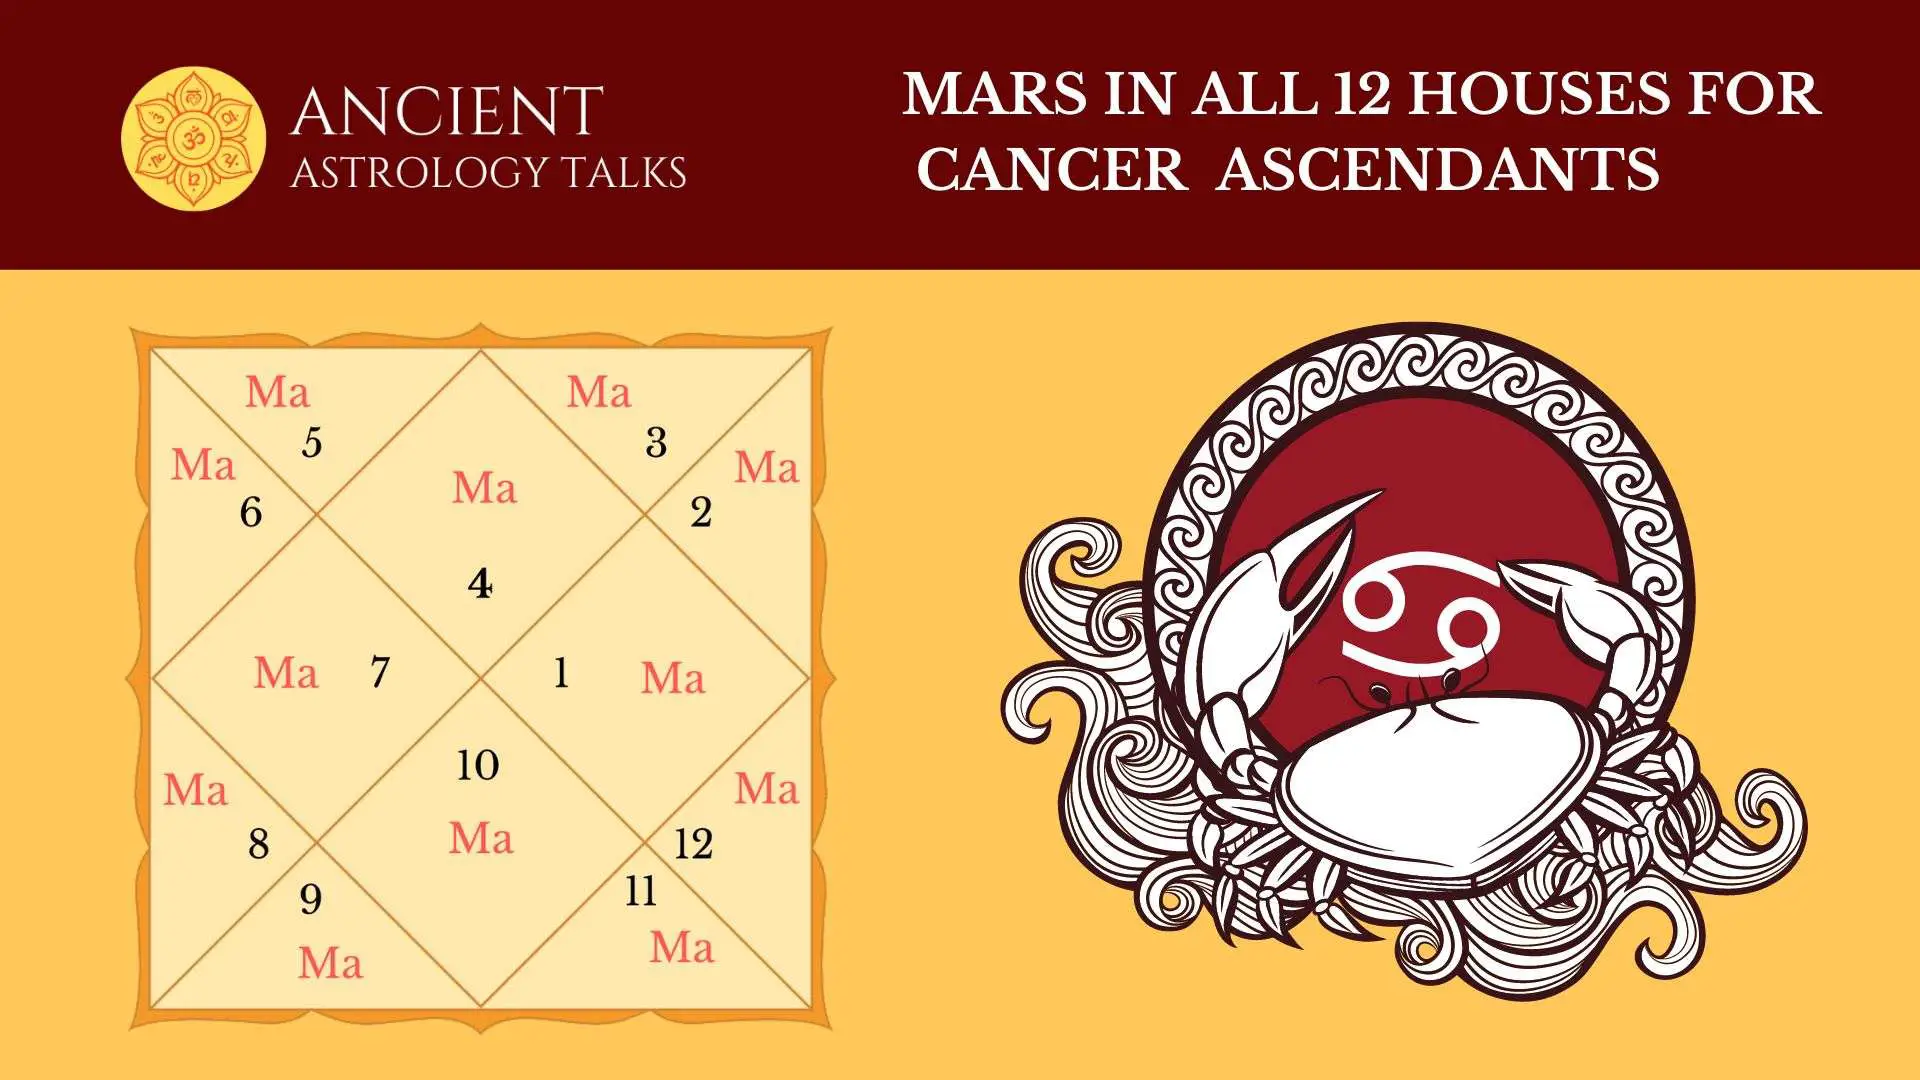 Mars in All 12 Houses for Cancer Ascendants